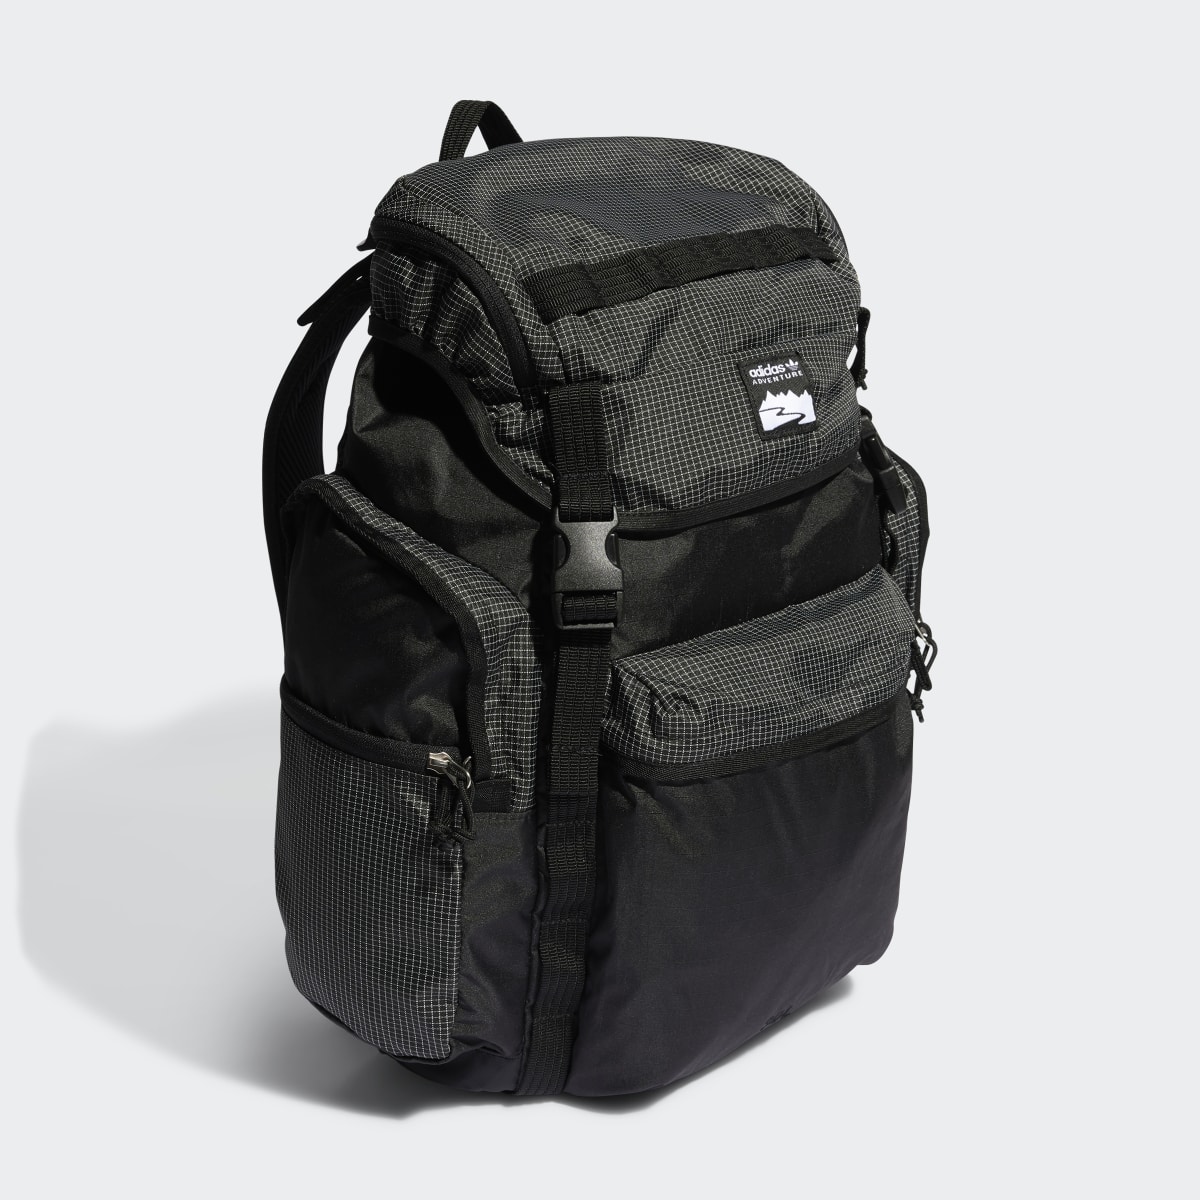 Adidas Adventure Toploader Backpack. 4